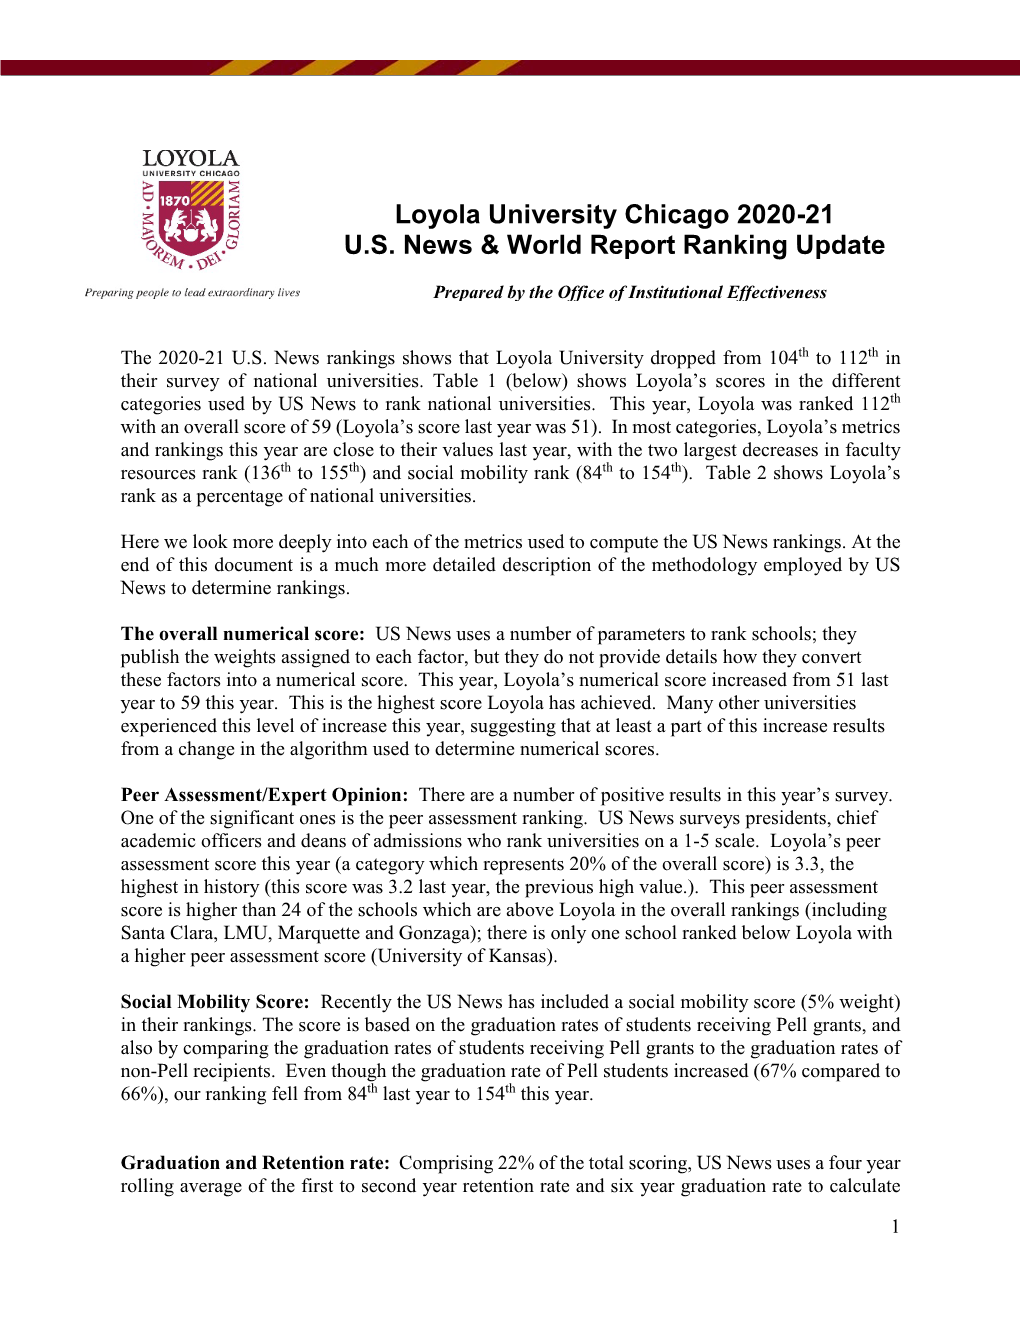 Loyola University Chicago 2020-21 U.S. News & World Report Ranking